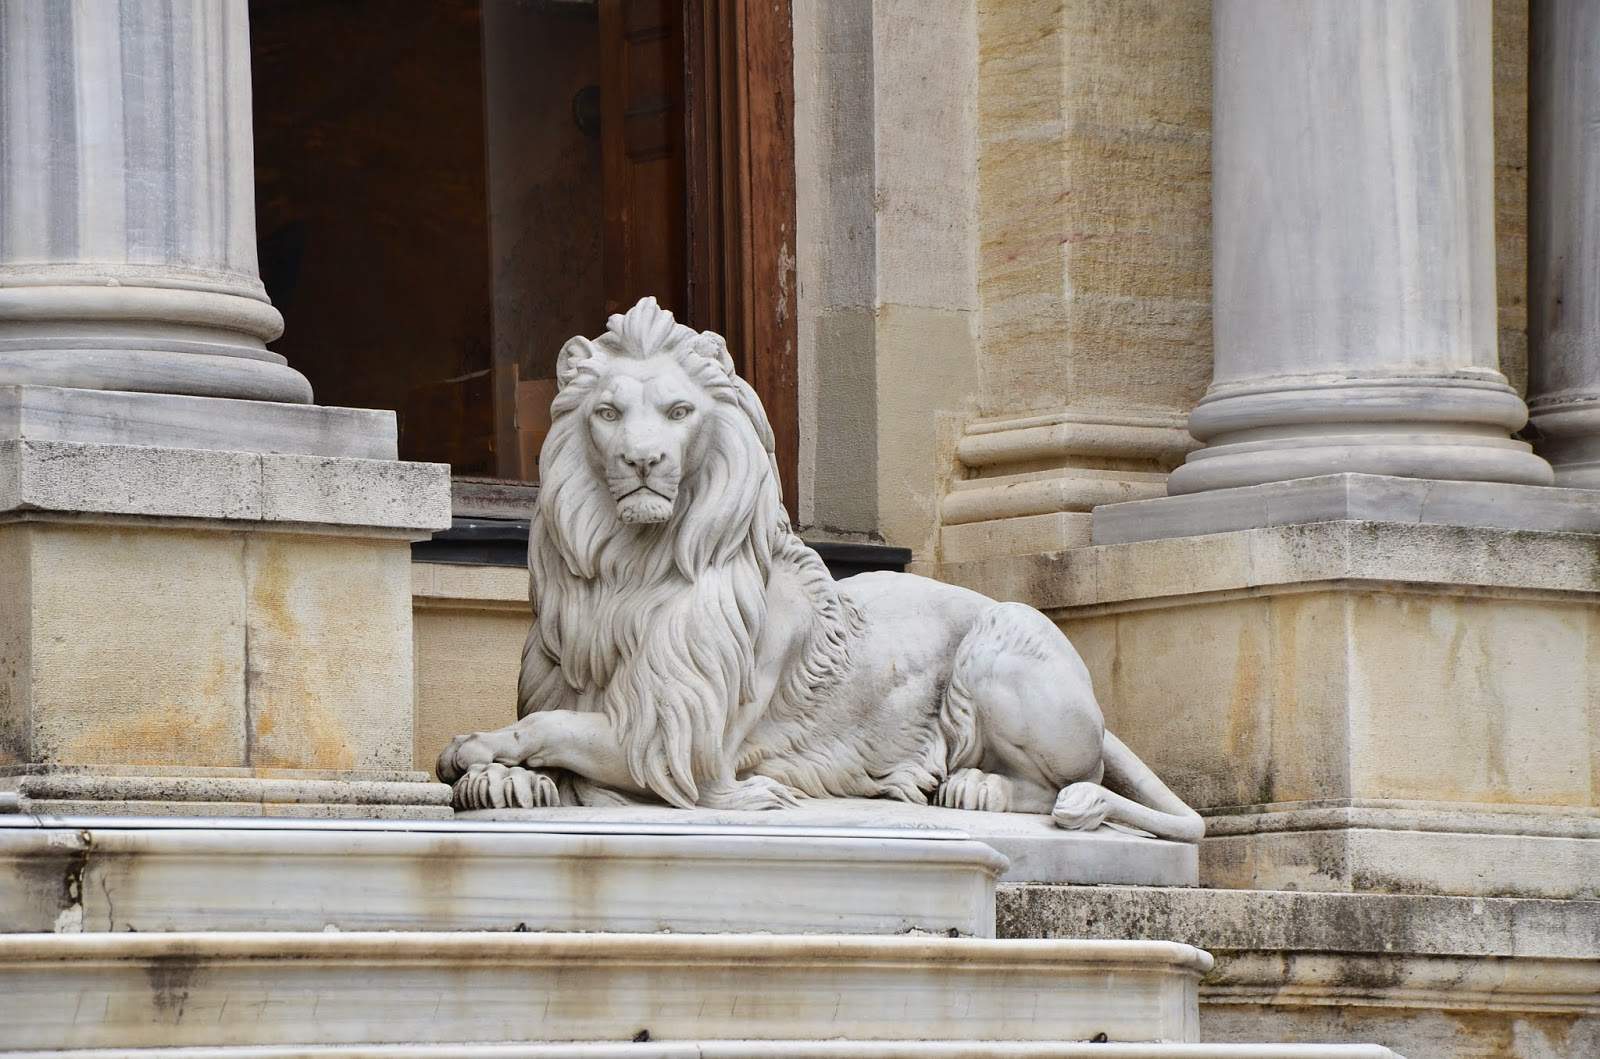 A lion guarding the palace at Beylerbeyi Palace in Beylerbeyi, Istanbul, Turkey